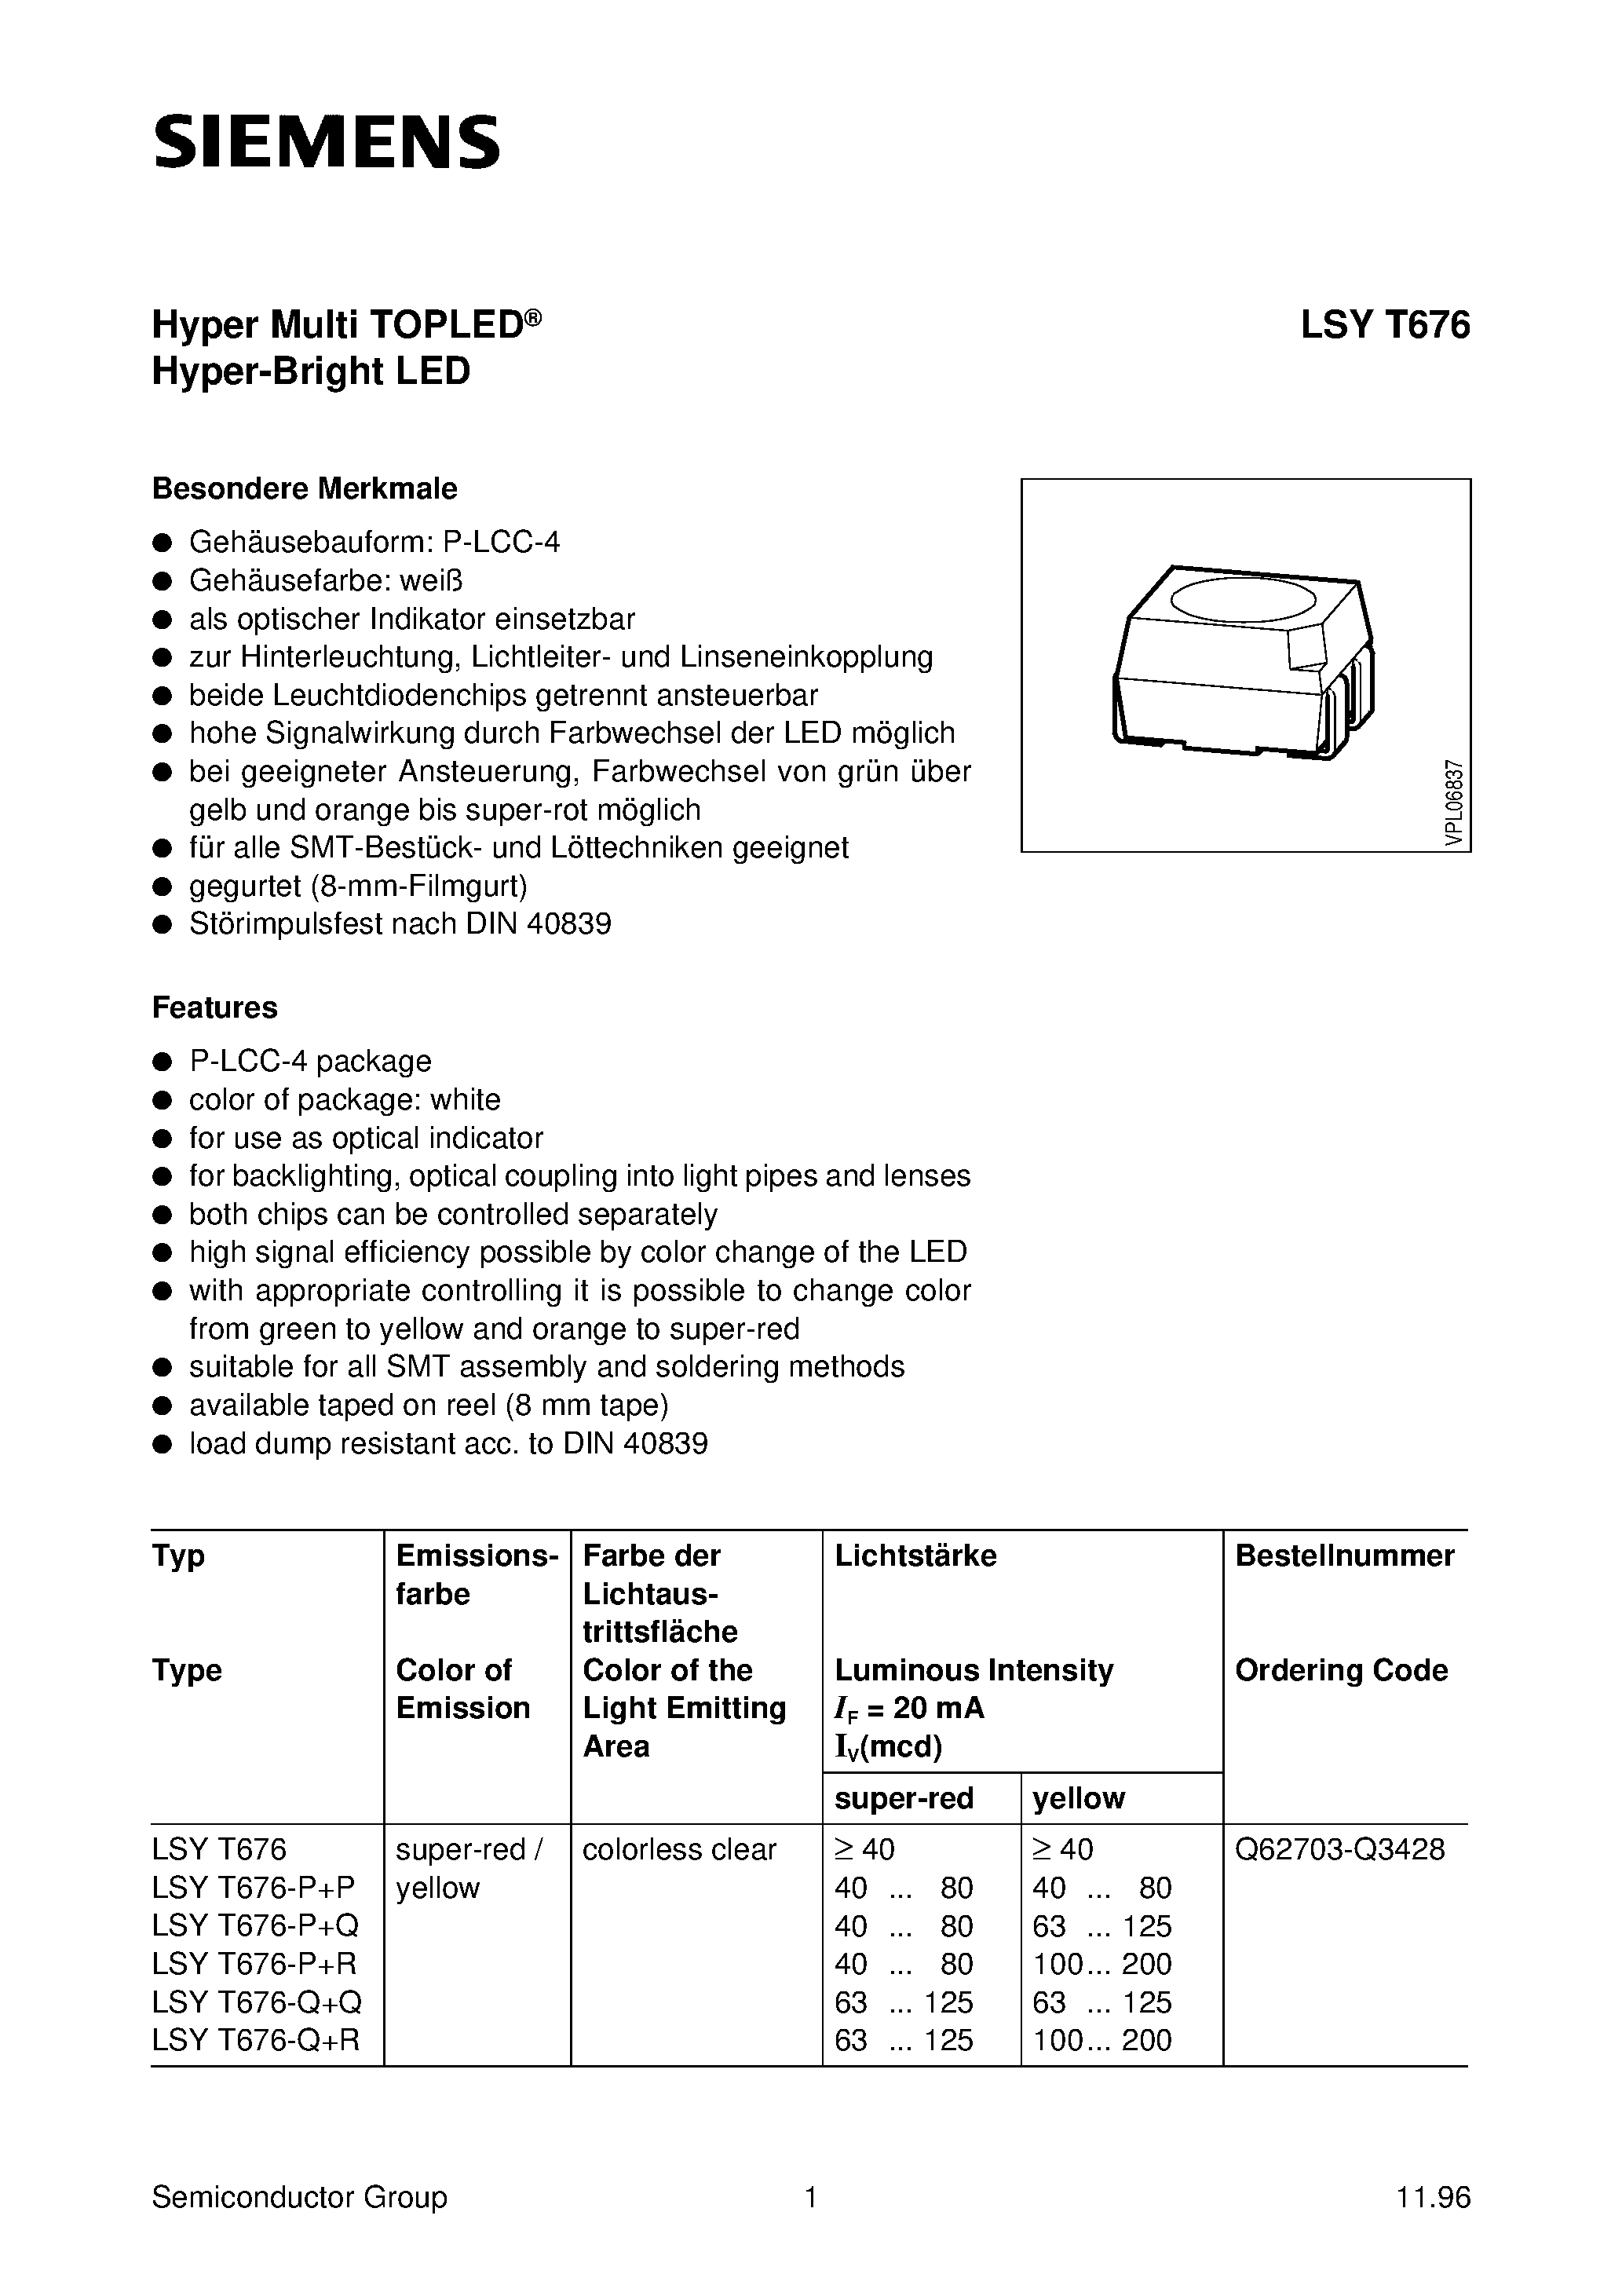 Datasheet LSYT676-P+Q - Hyper Multi TOPLED Hyper-Bright LED page 1